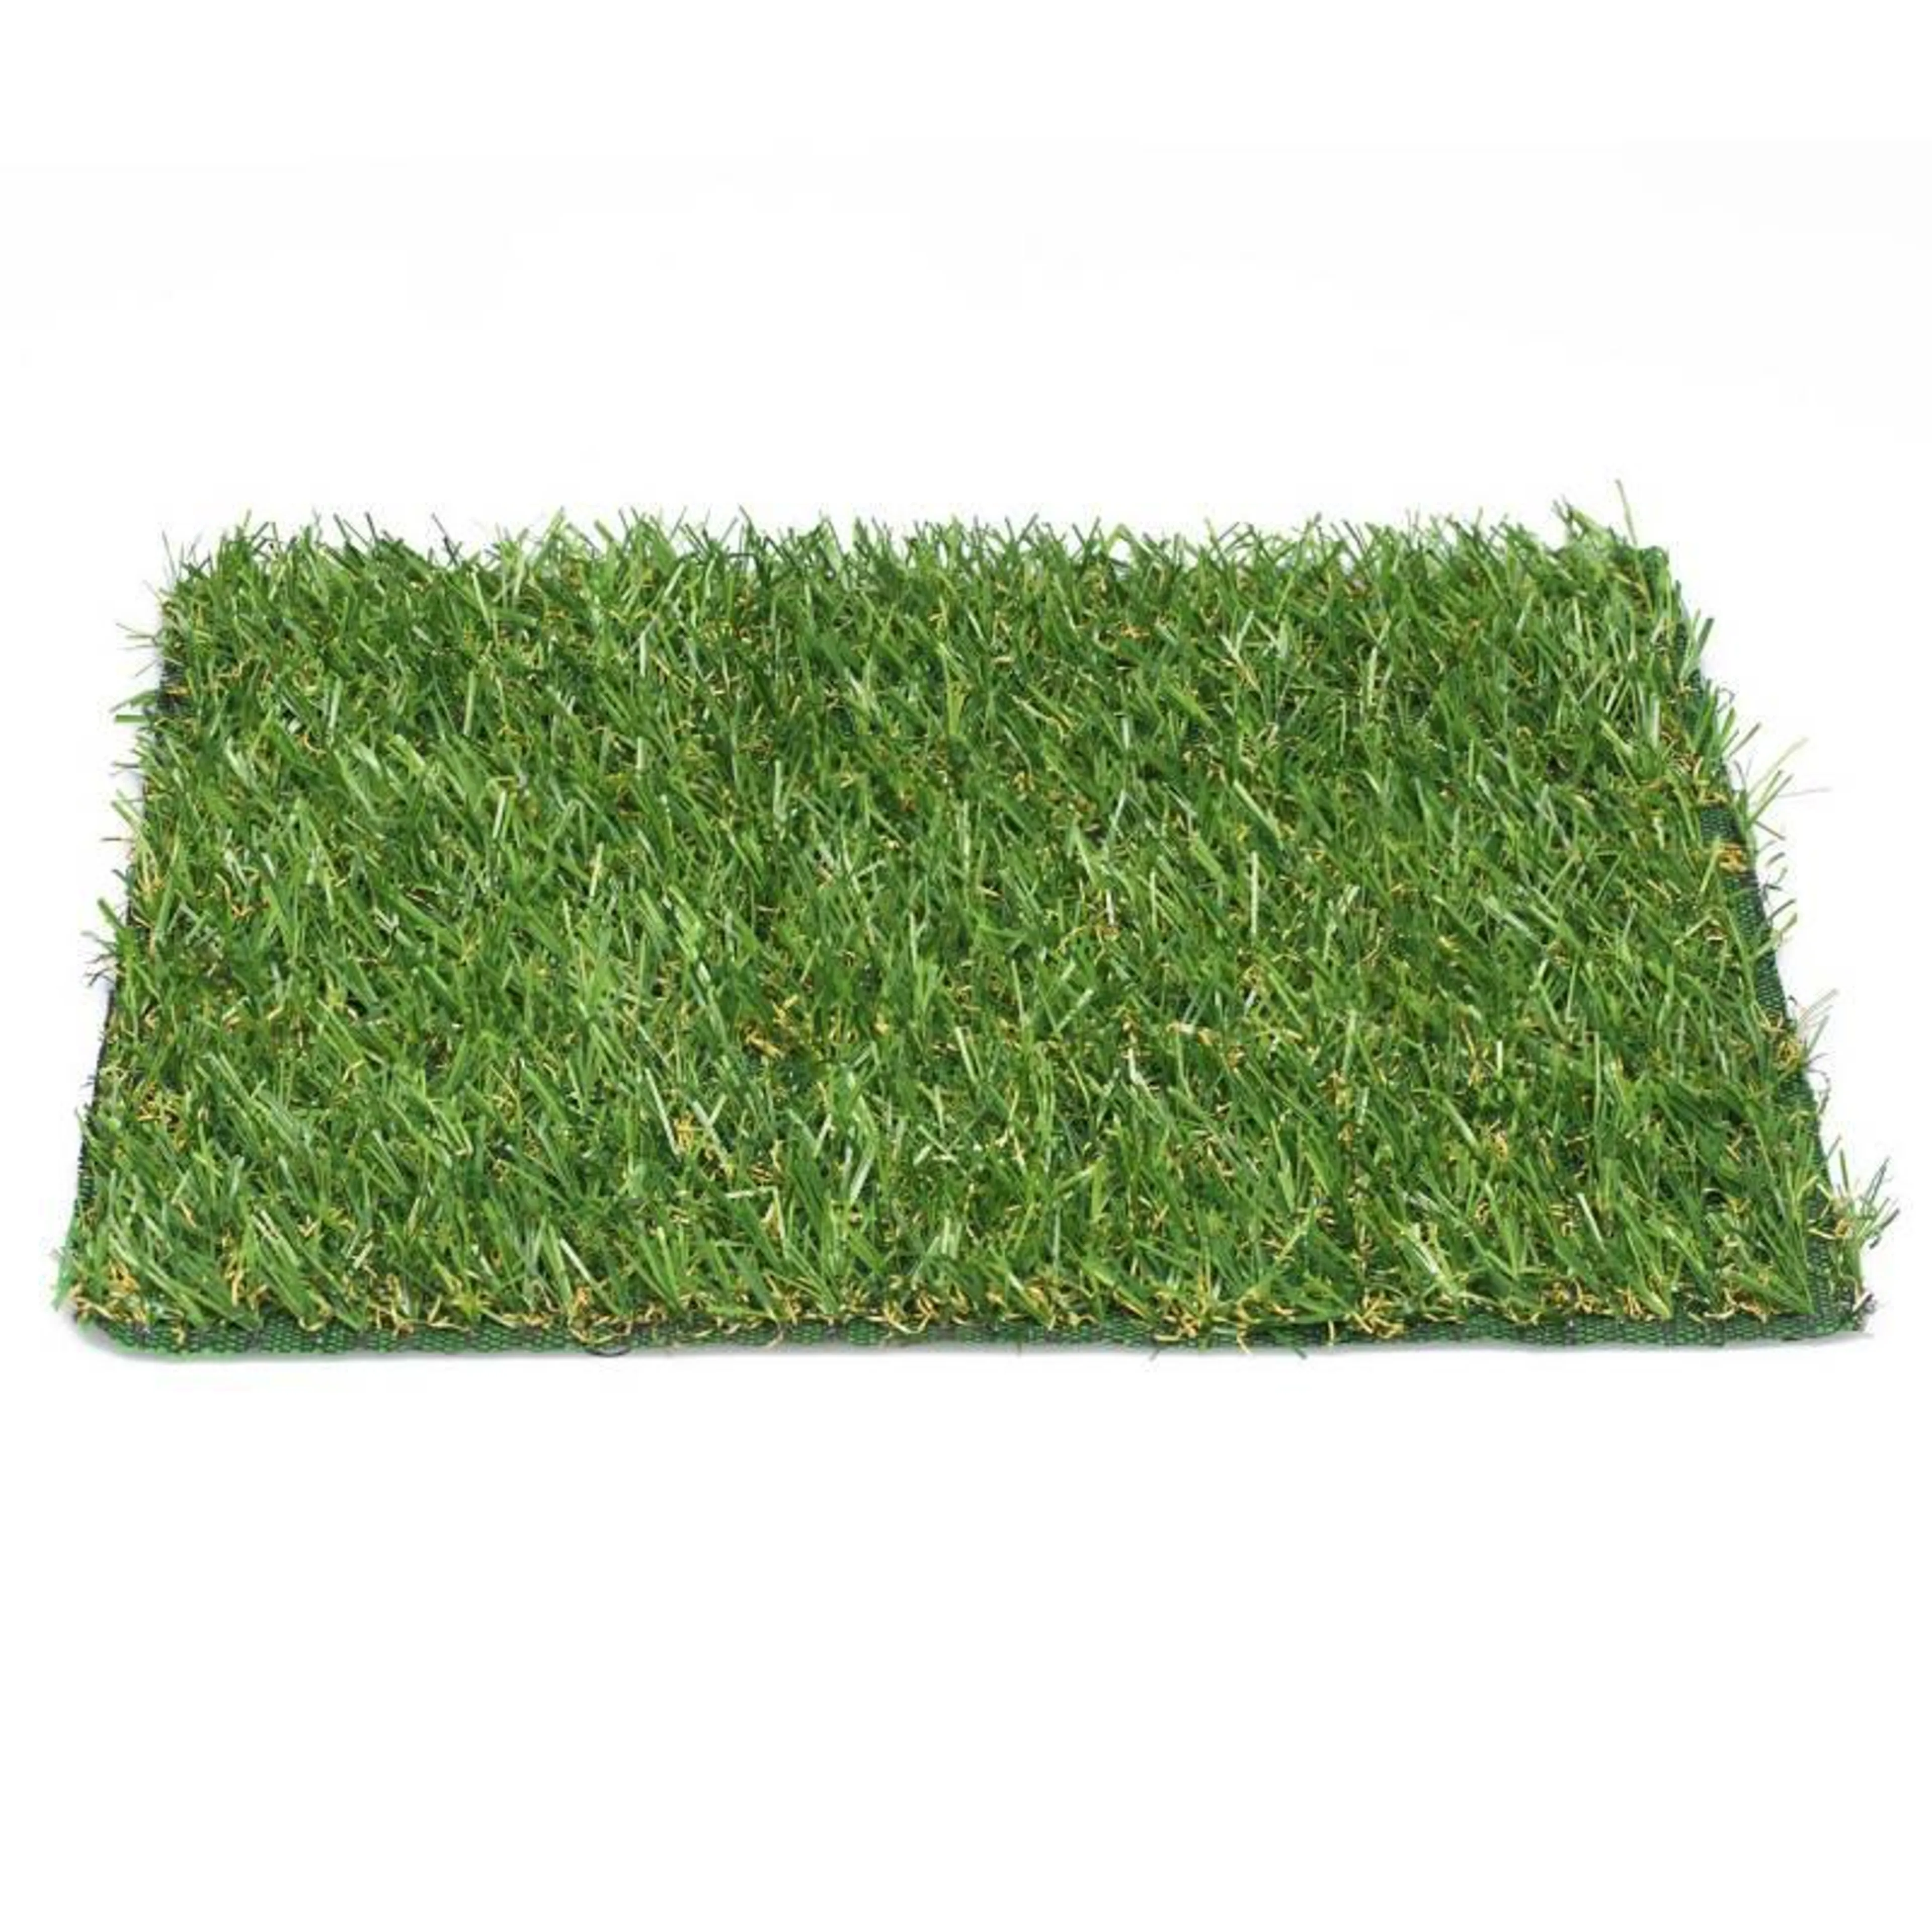 Grass Sintético 1x4 metros 15mm por Rollo